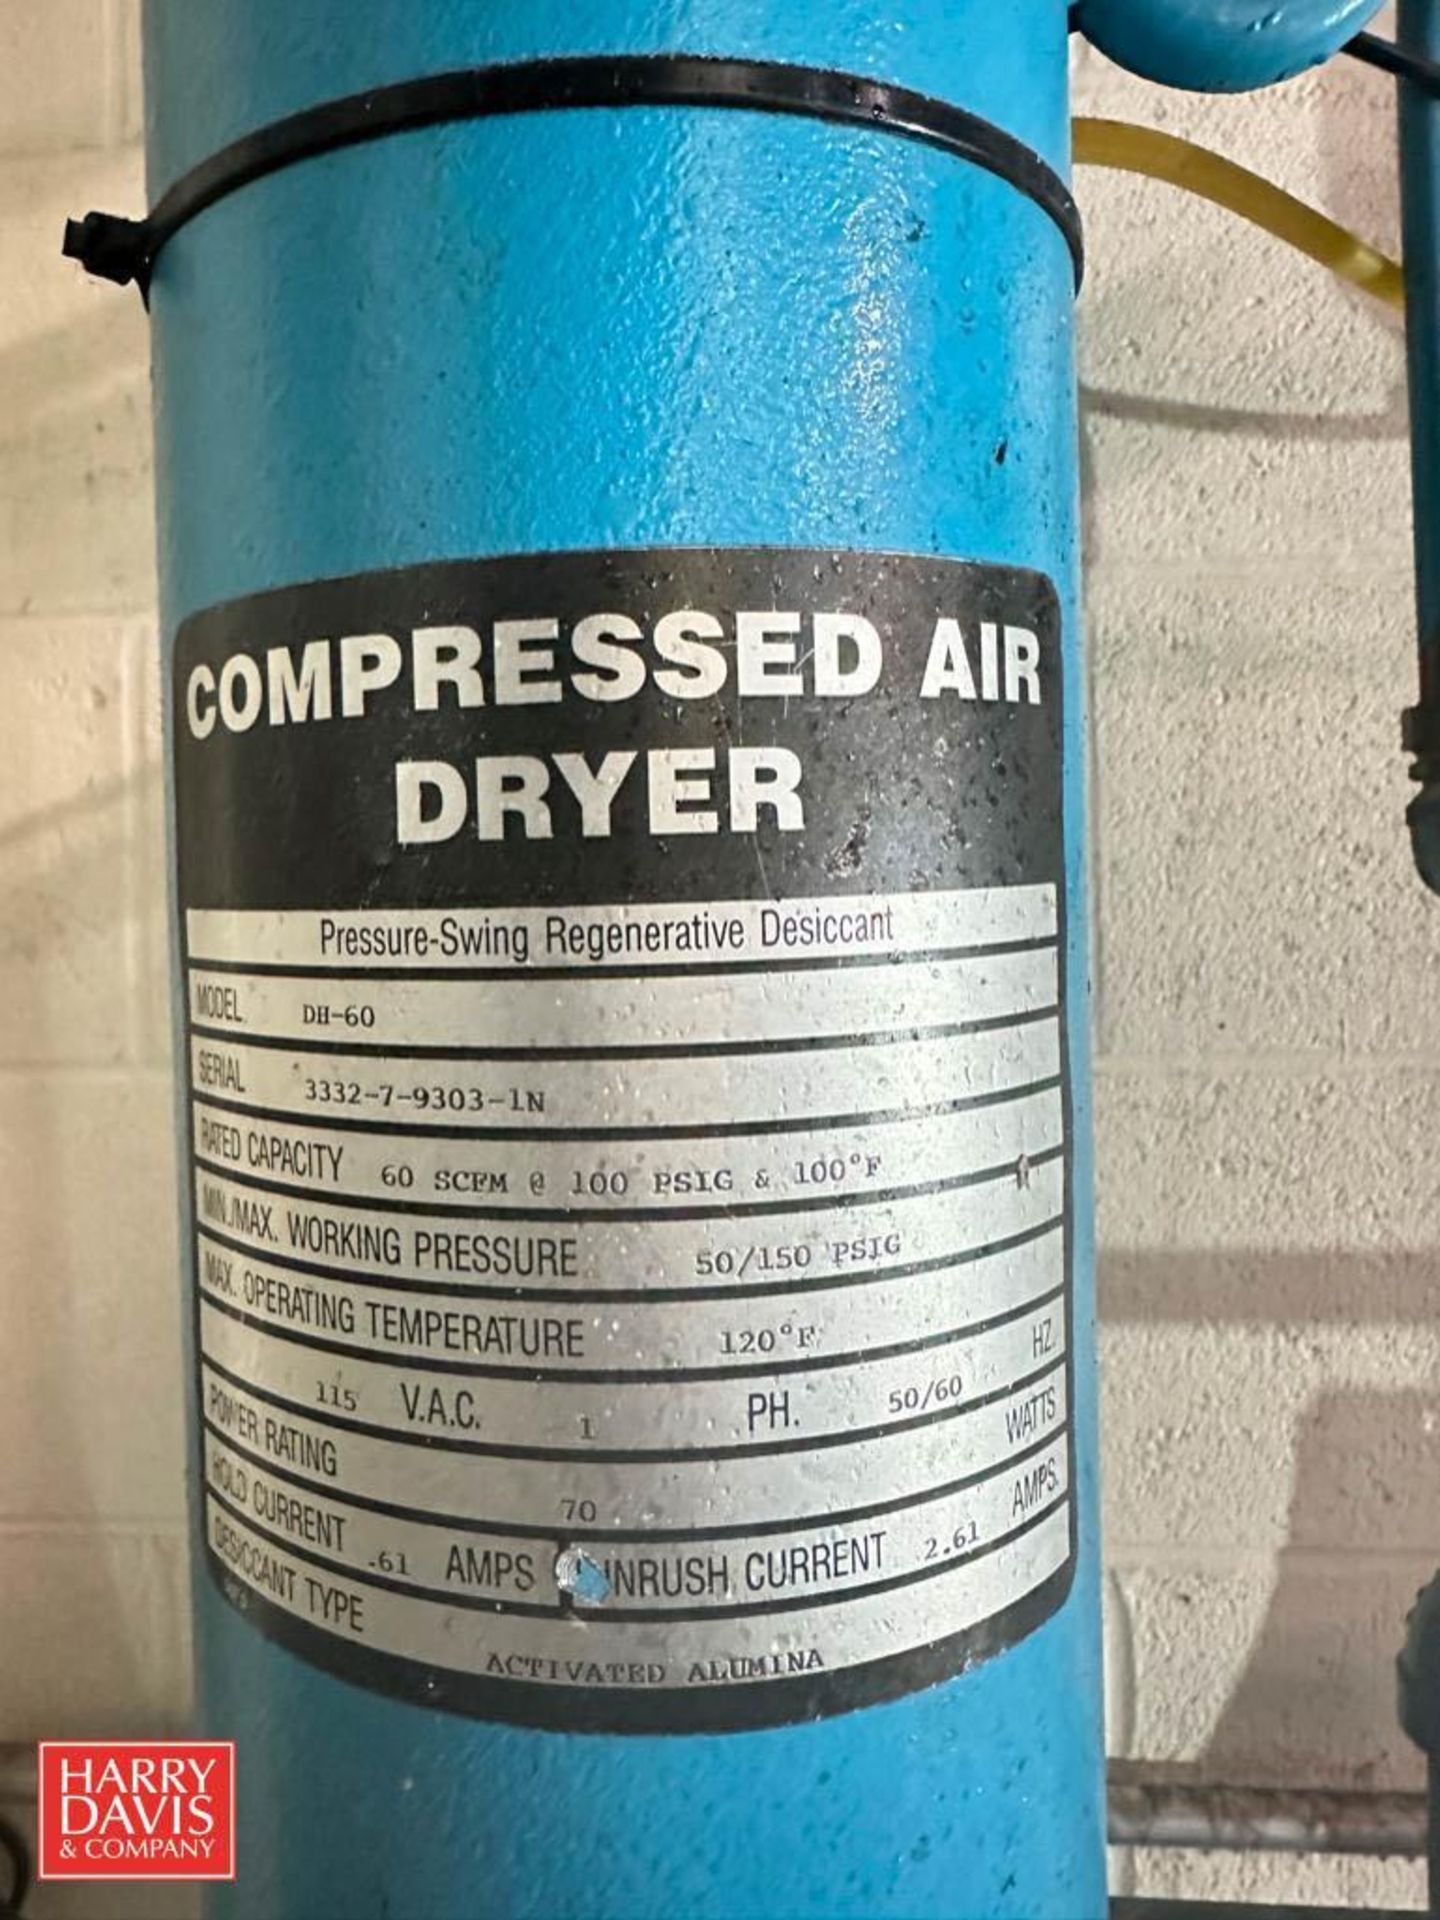 Hankison Compressed Air Dryer, Model: DH-60, S/N: 3332-7-9303-1N - Image 2 of 2